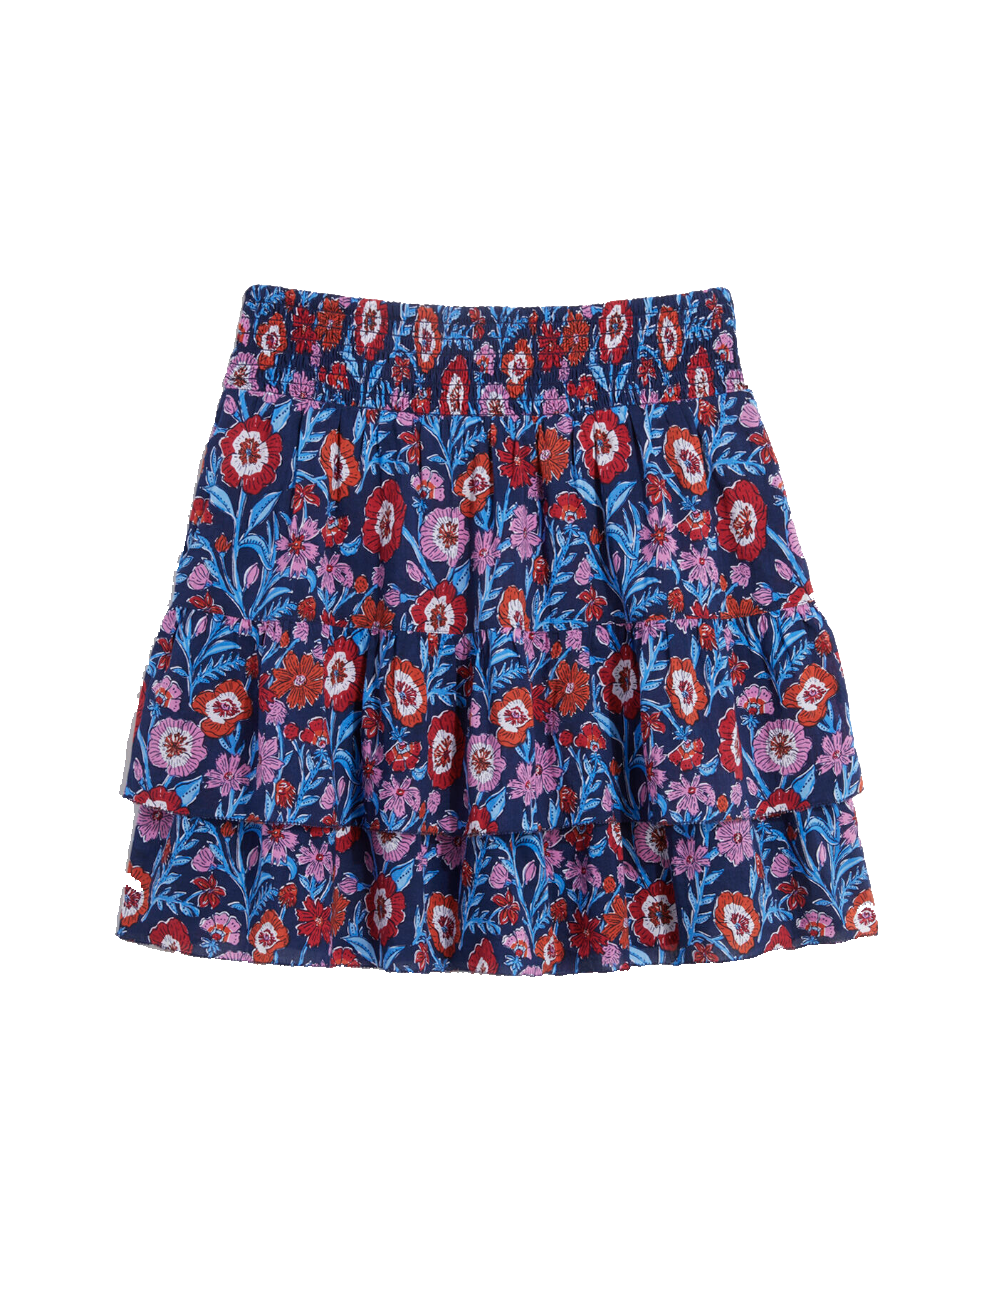 Ws Tisbury Floral Smocked Skirt